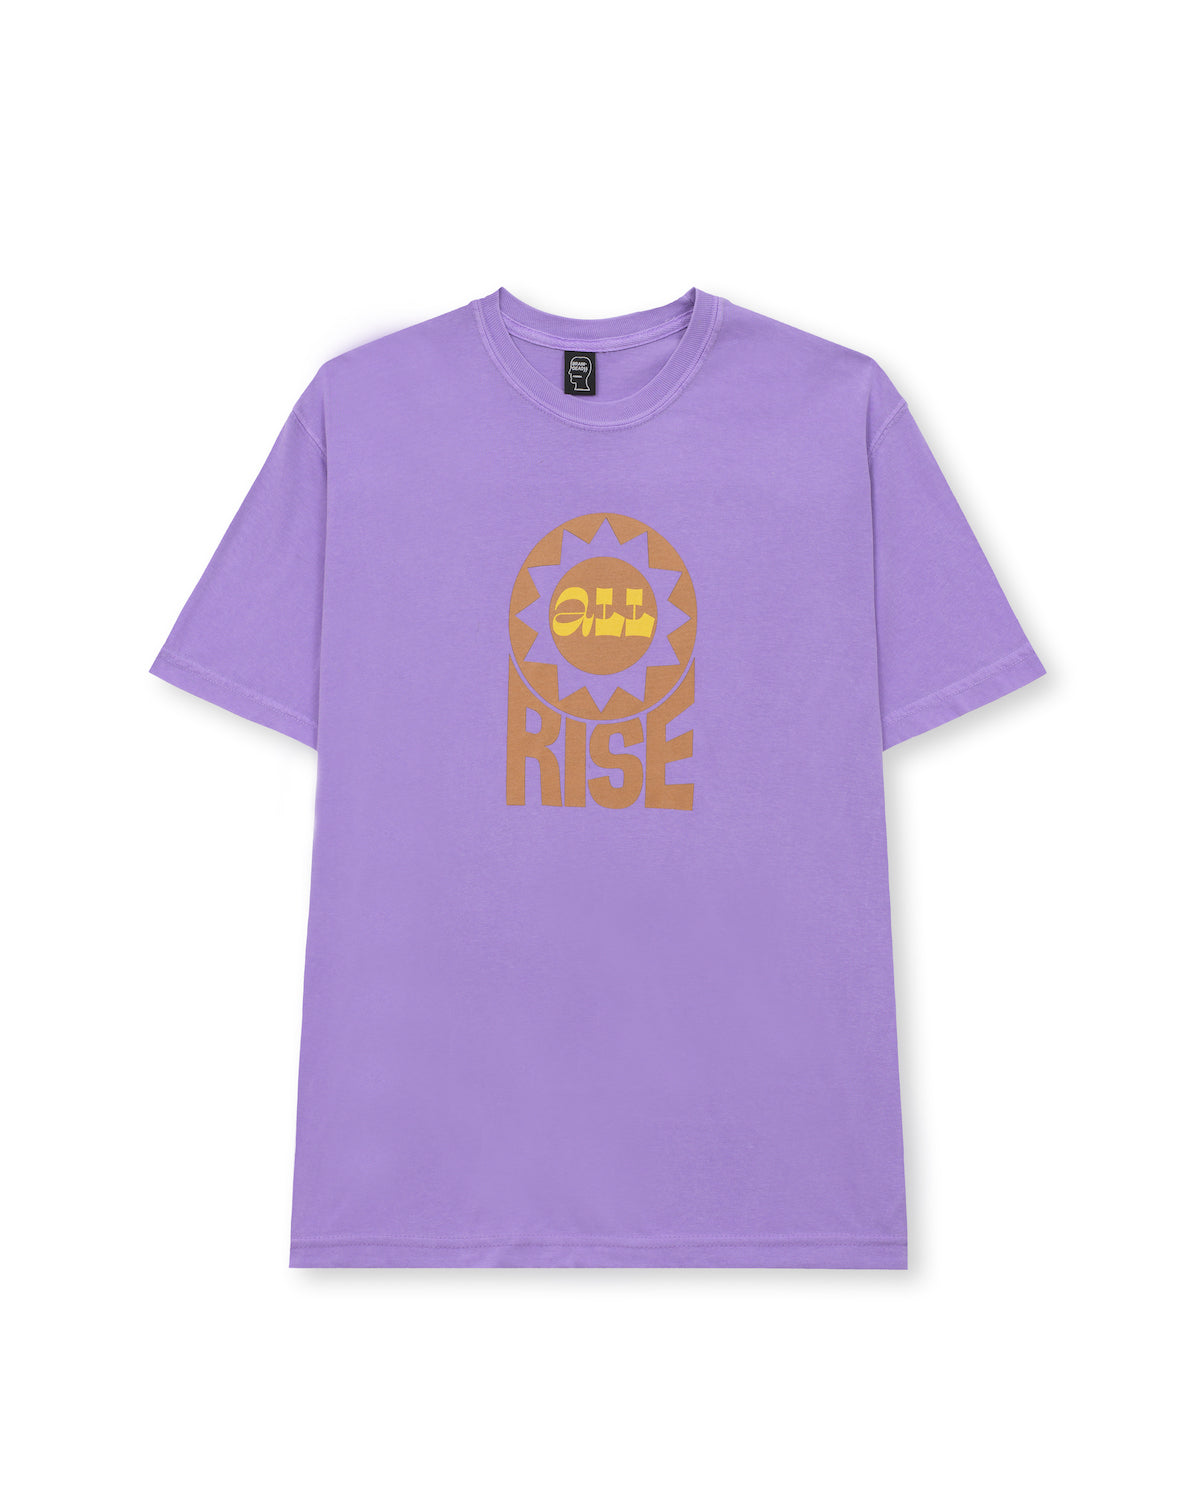 All Rise T-Shirt - Purple 1